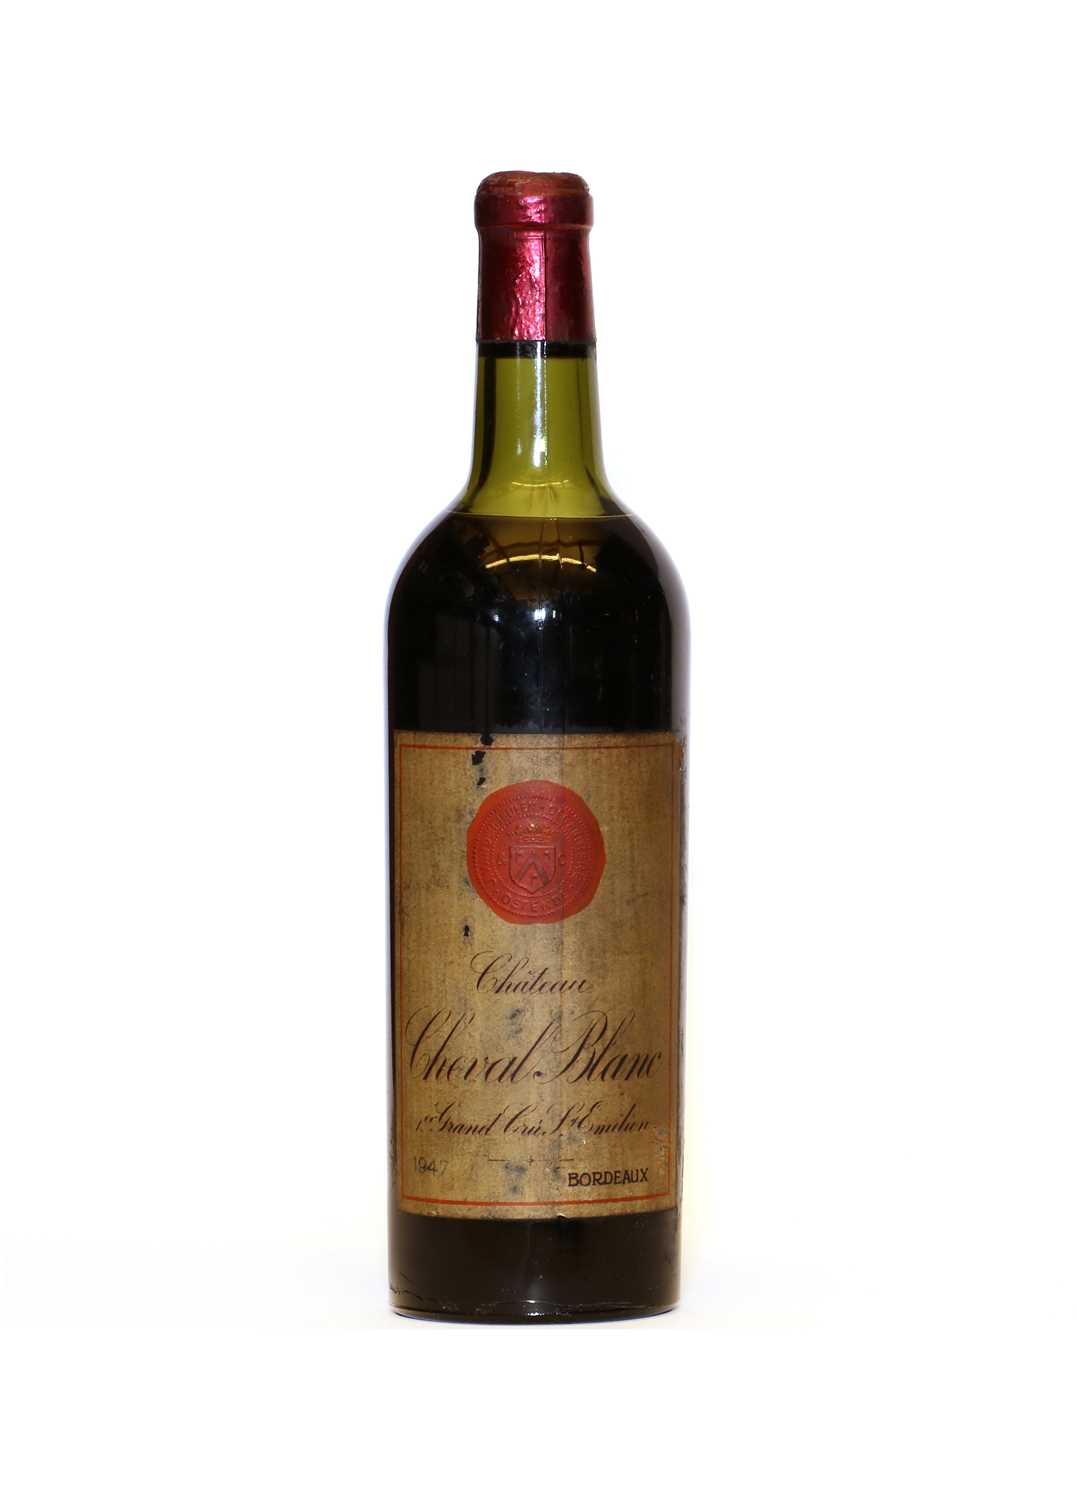 Lot 90 - Chateau Cheval Blanc, Saint Emilion 1er Grand Cru Classe, 1947, one bottle